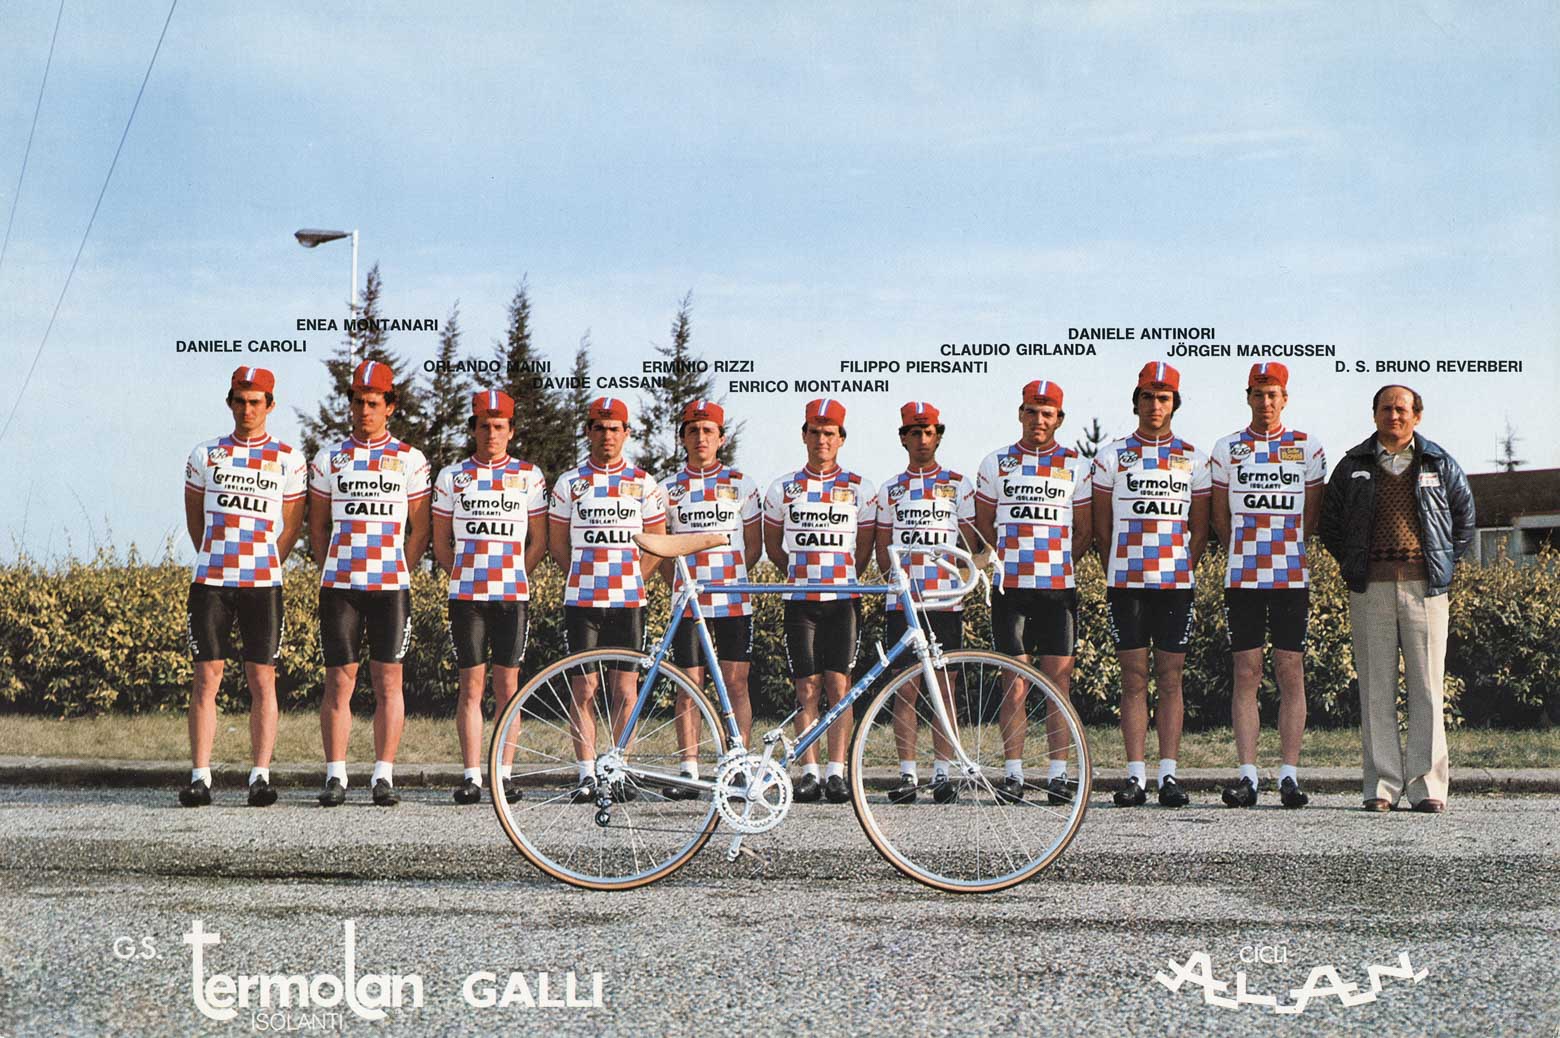 Galli postcard - 1982 Termolan-Galli cycling team scan 1 main image